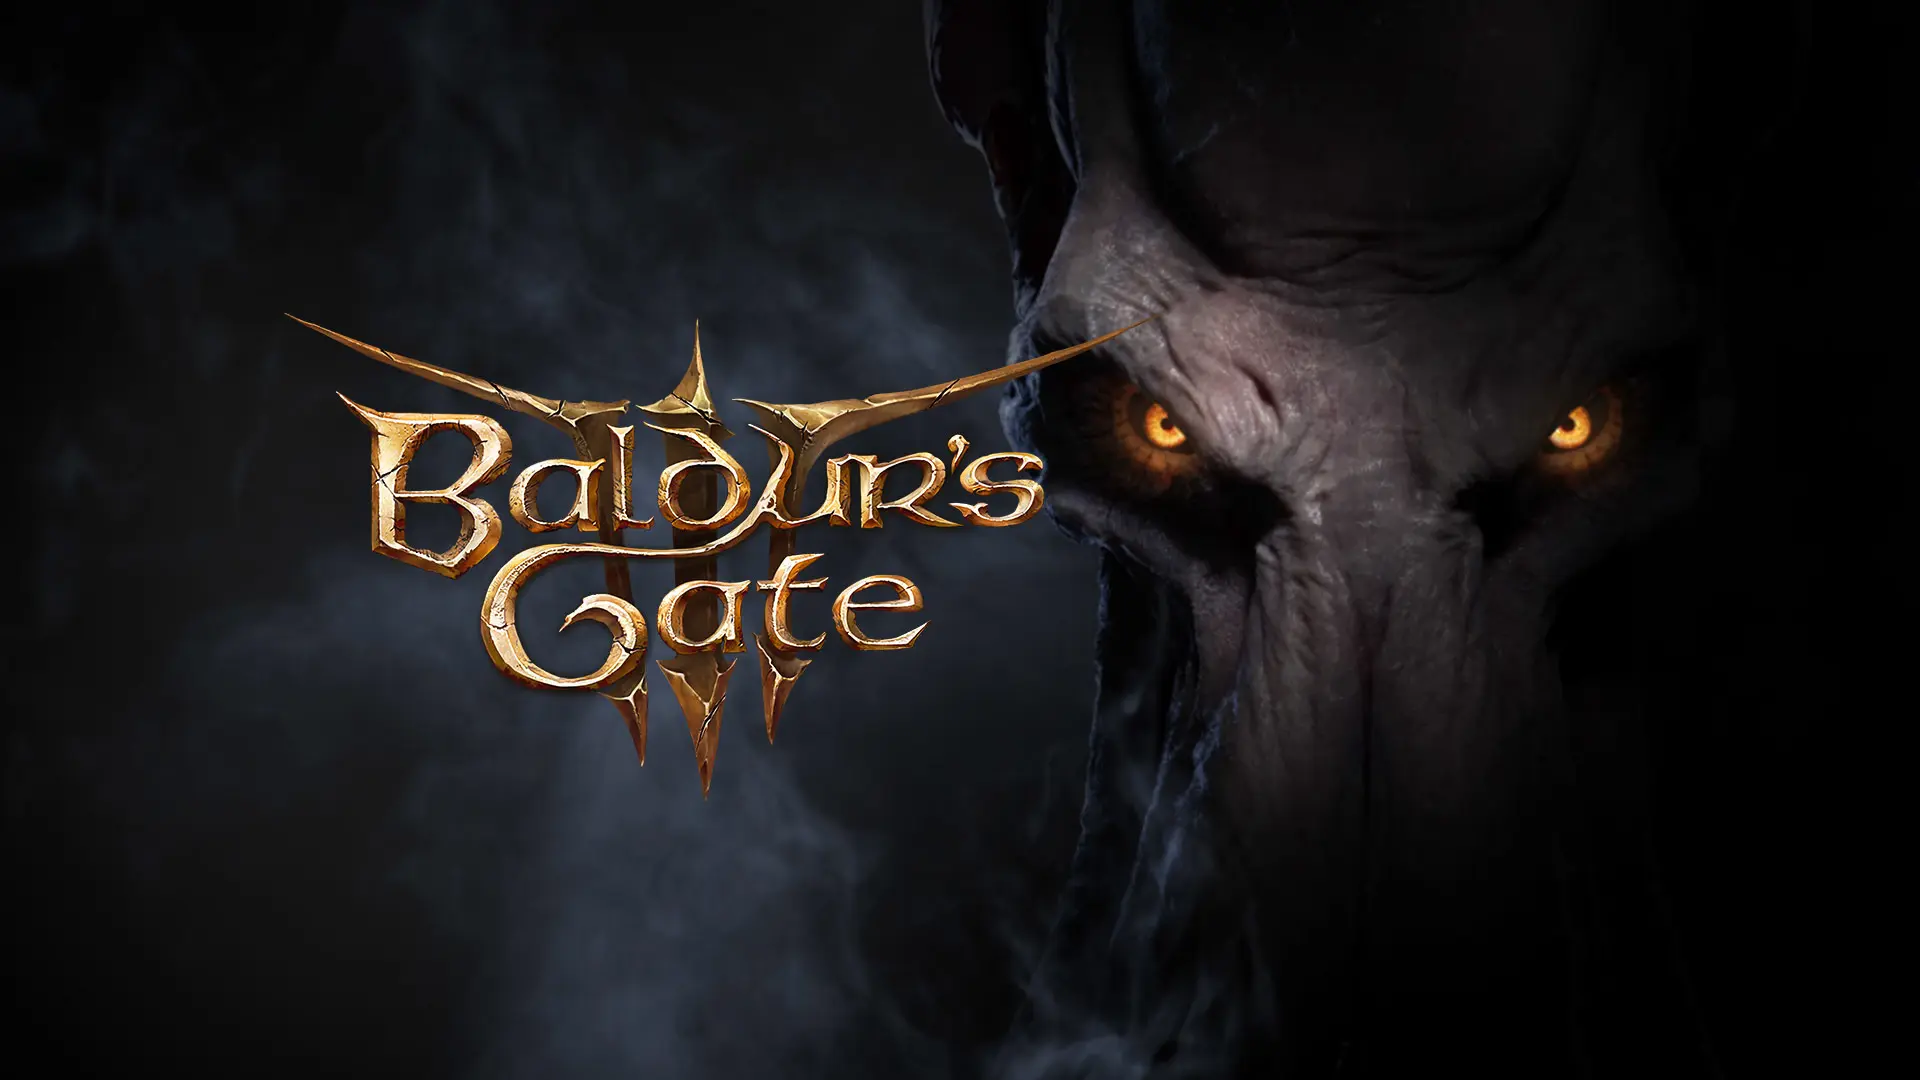 Baldur's Gate III: a release planned for 2020?